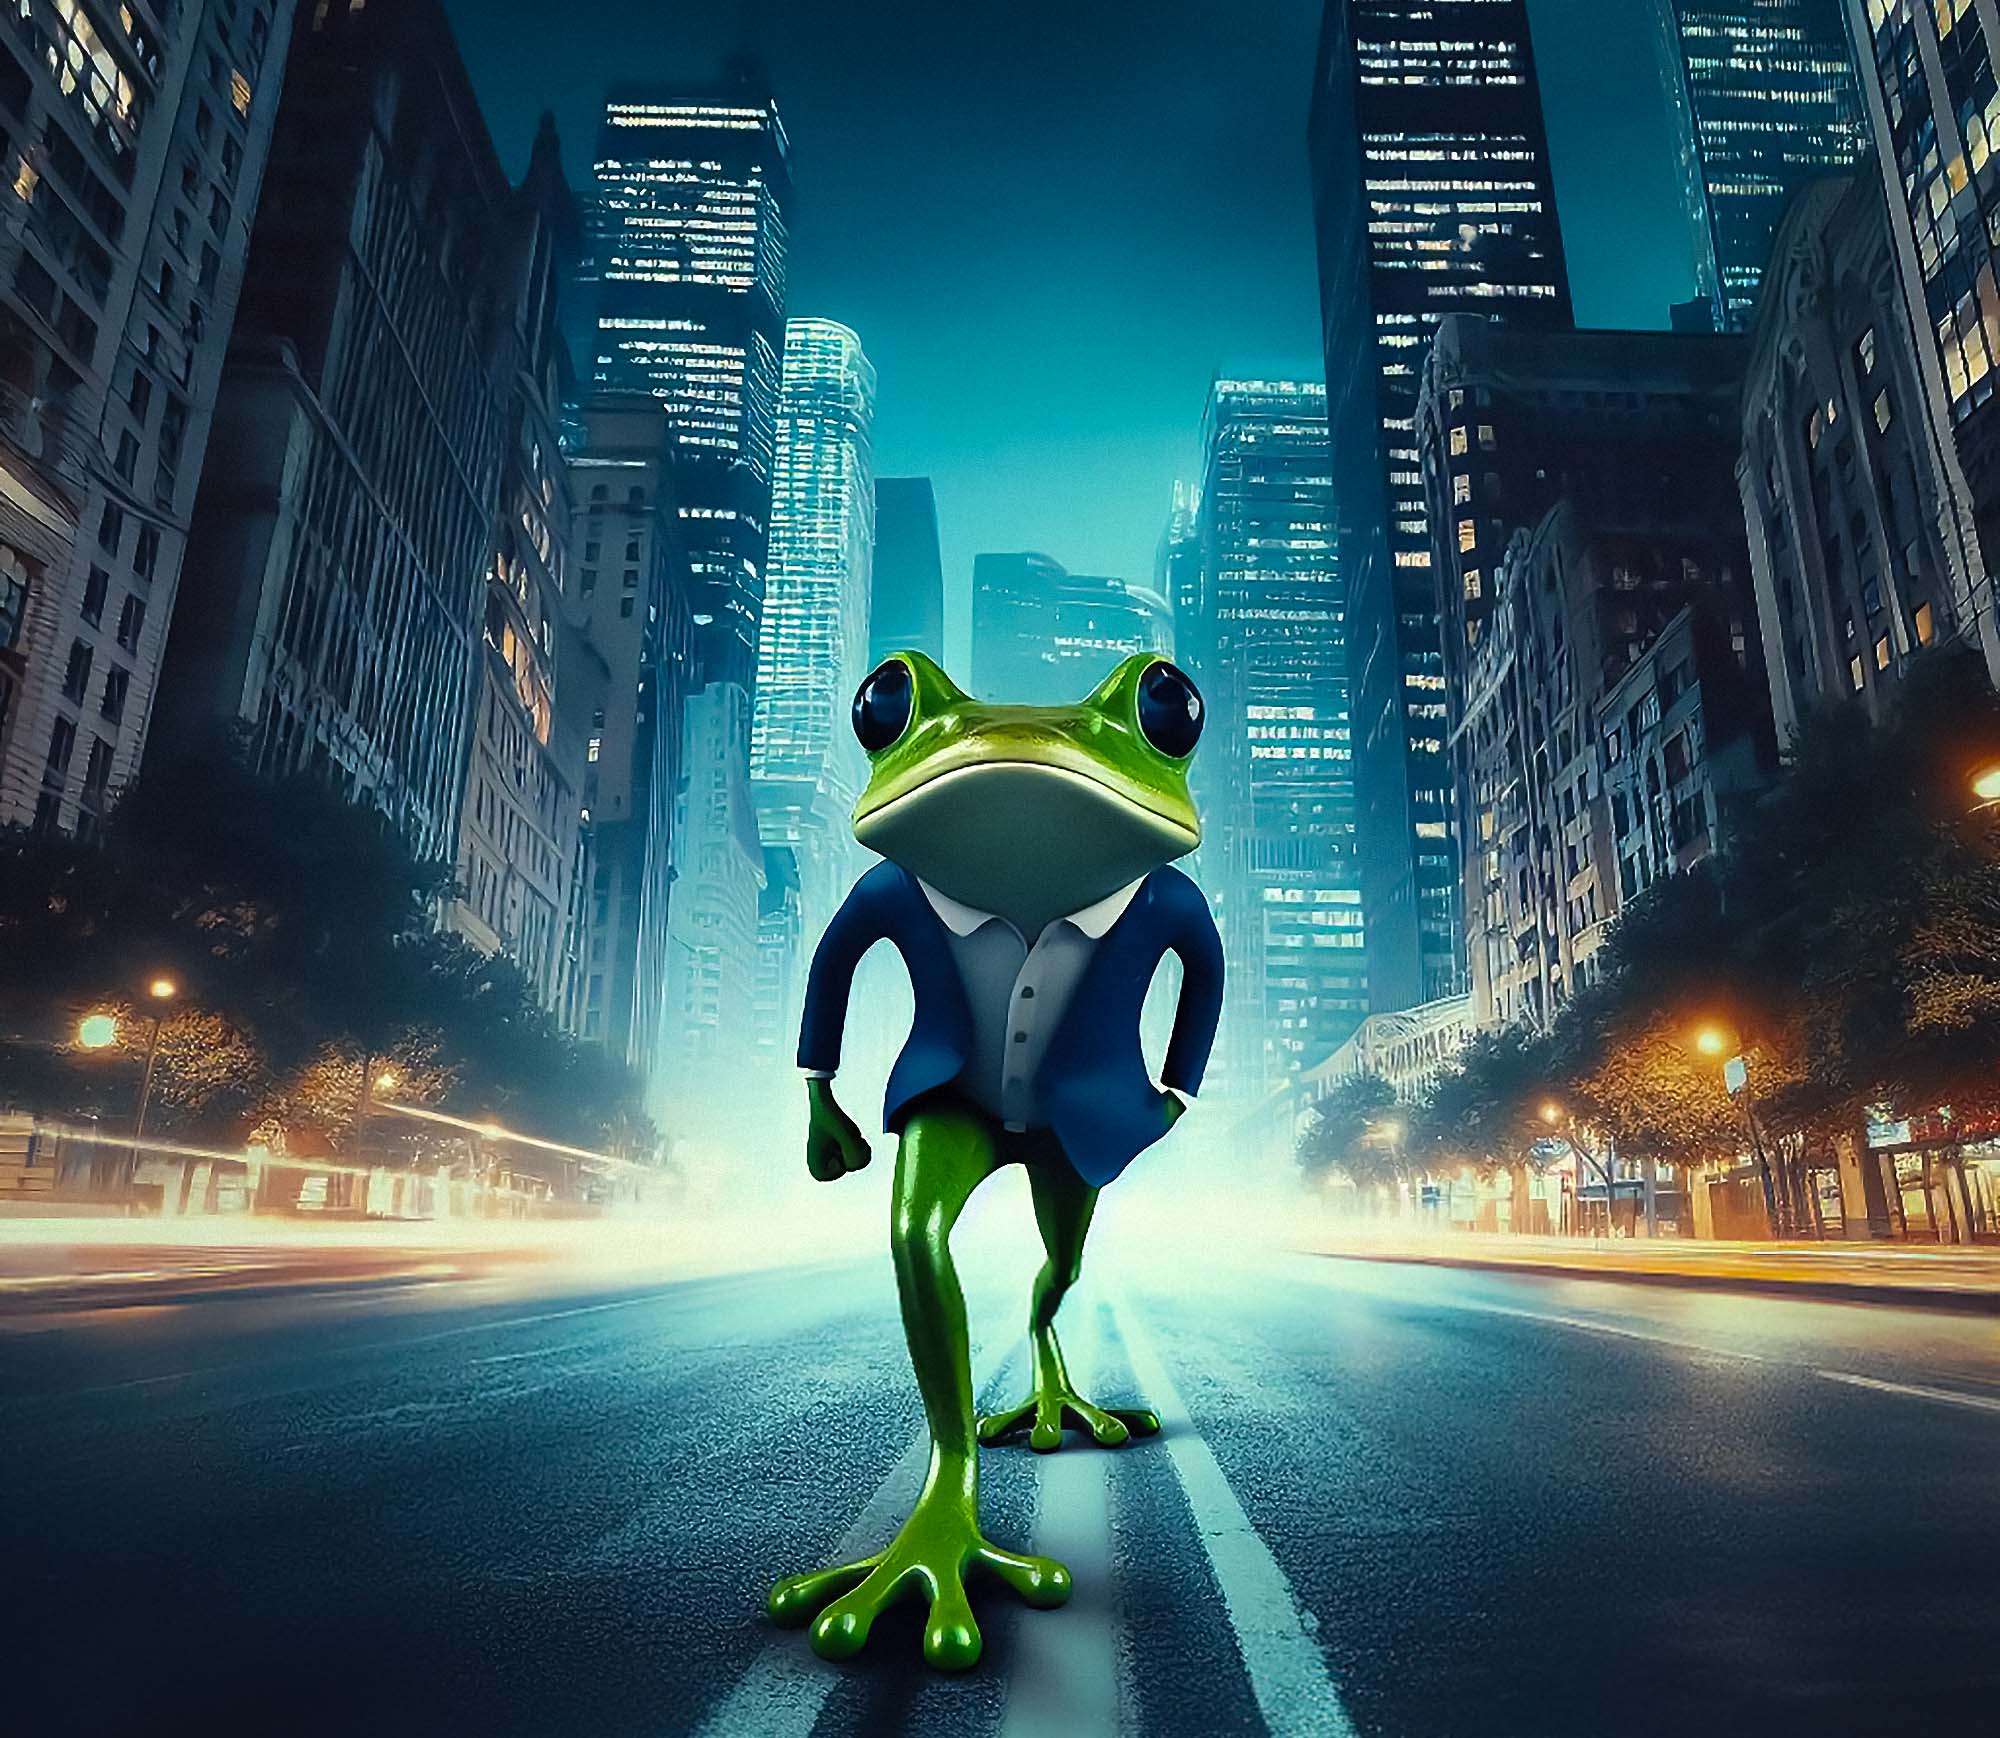 imagine2024-frog-city-1